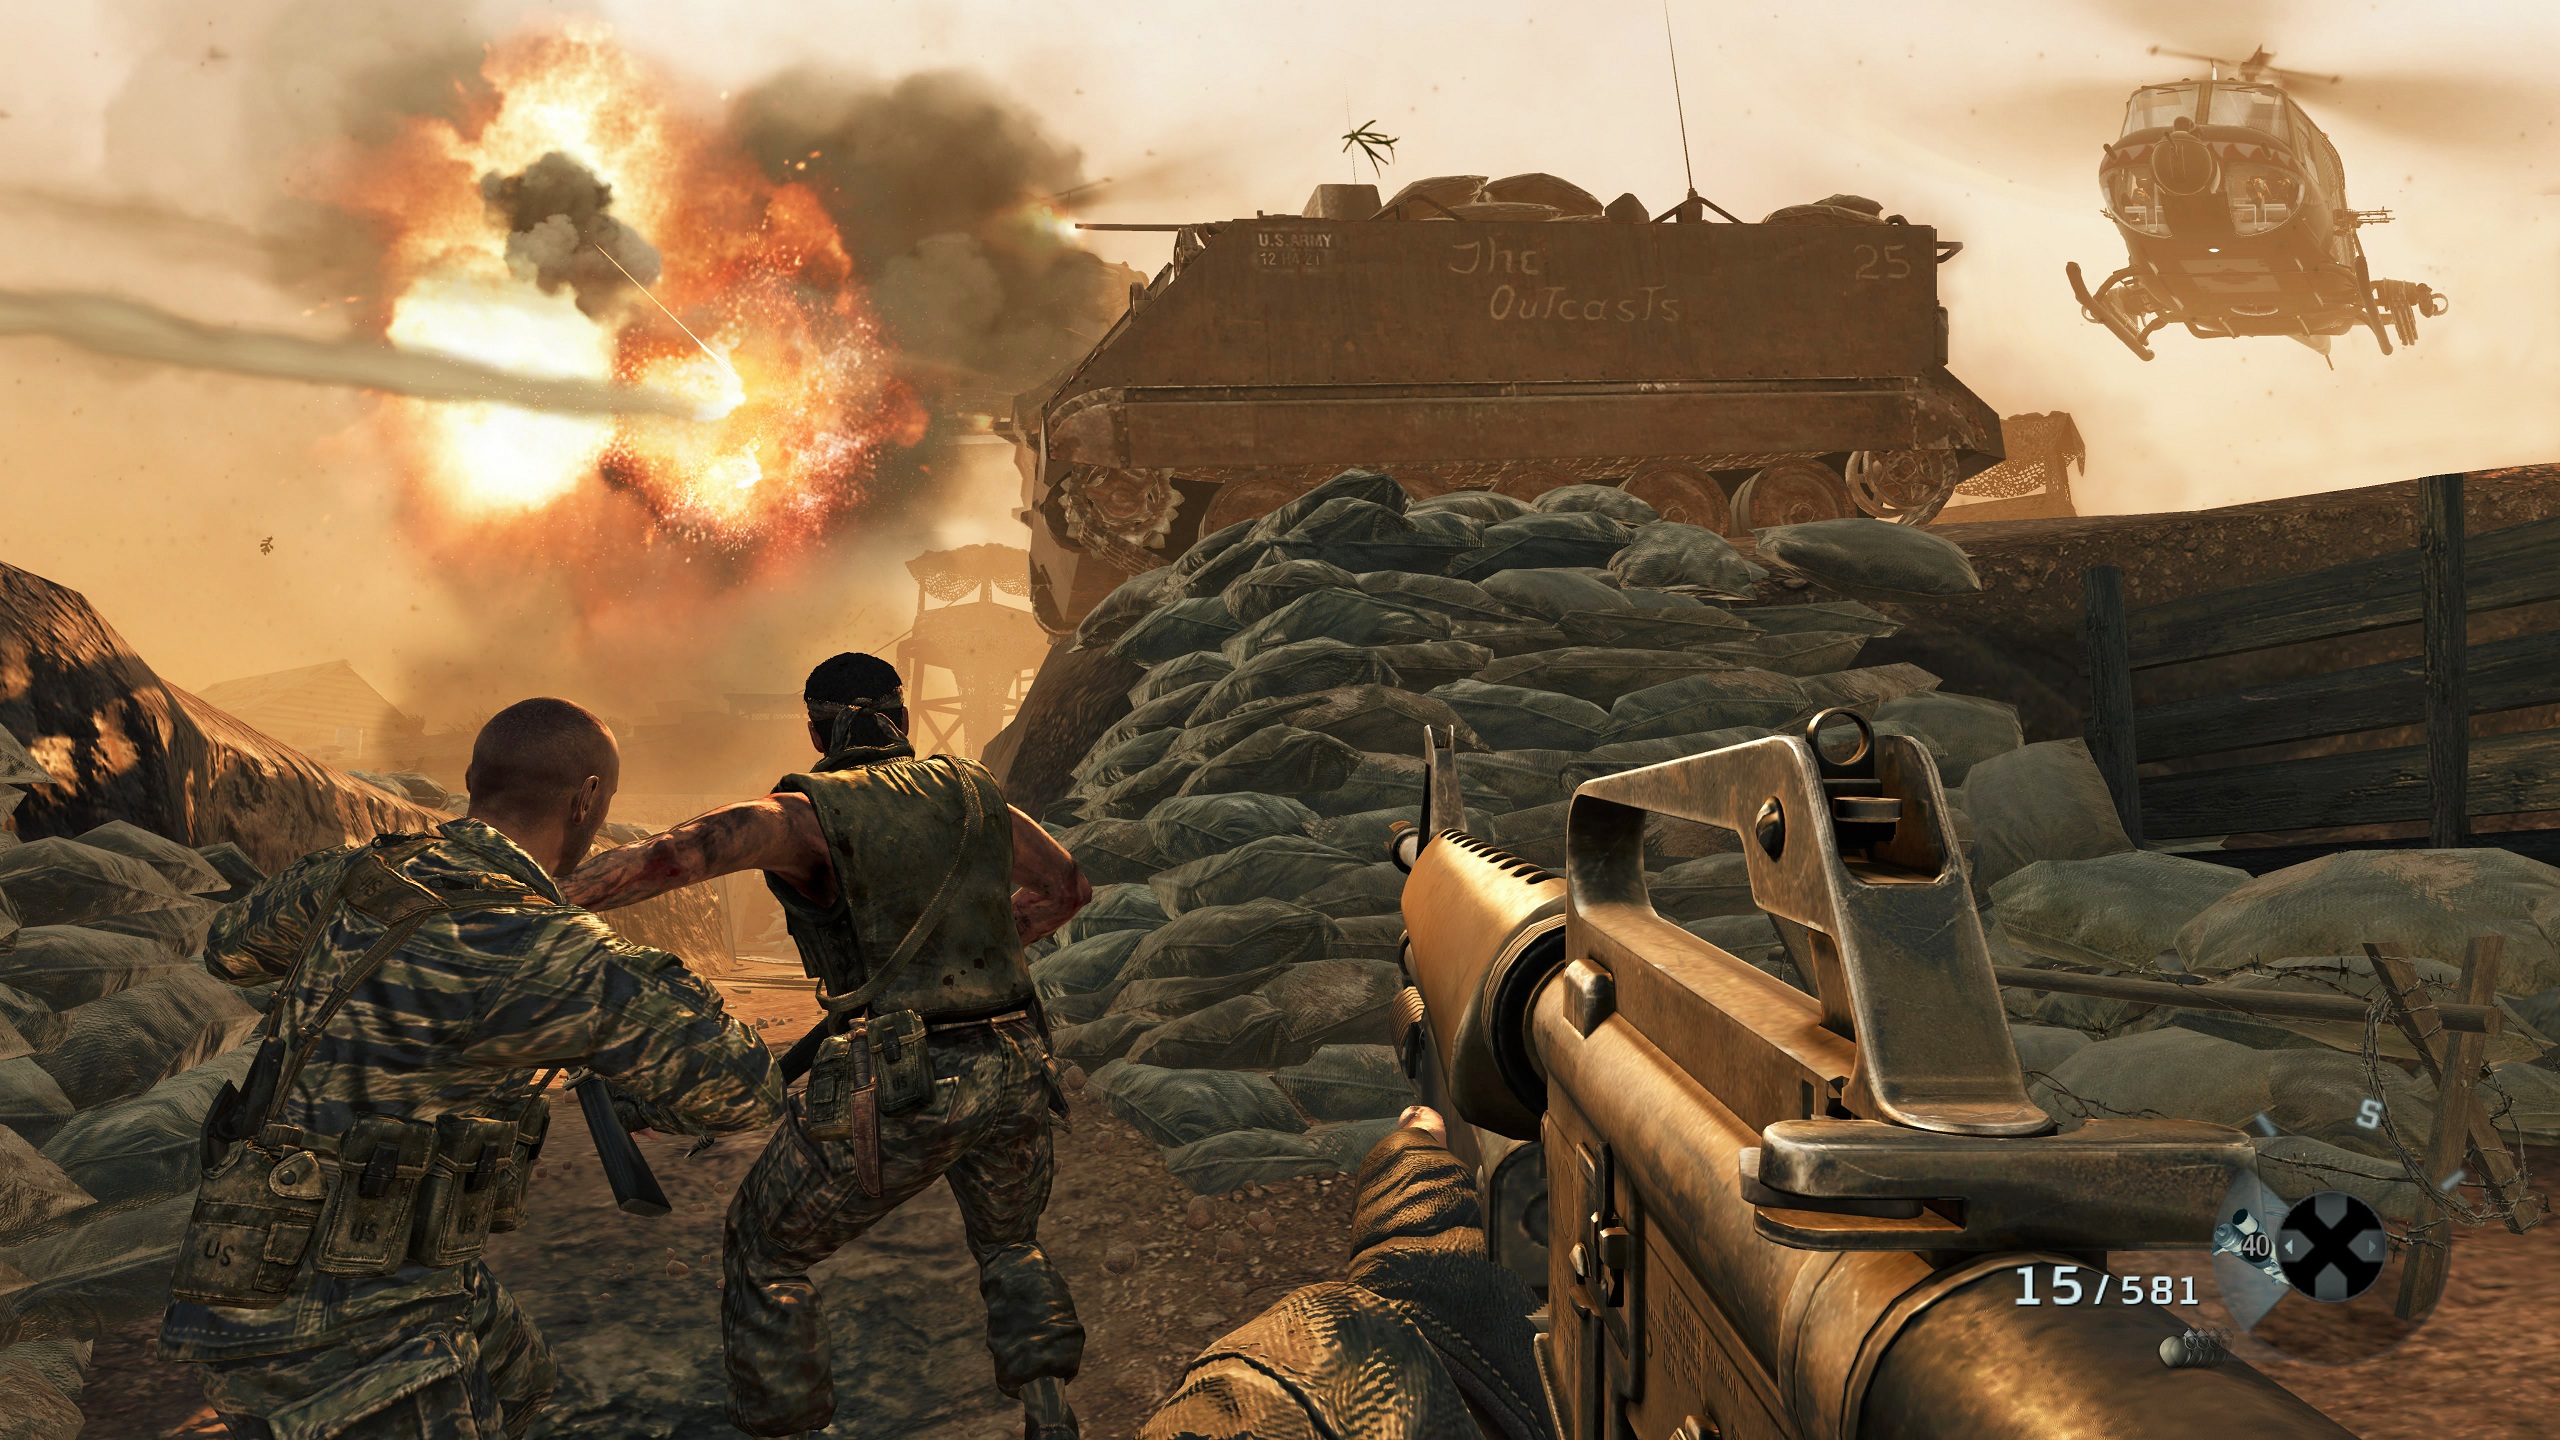  Call of Duty: Black Ops - Mac : Video Games